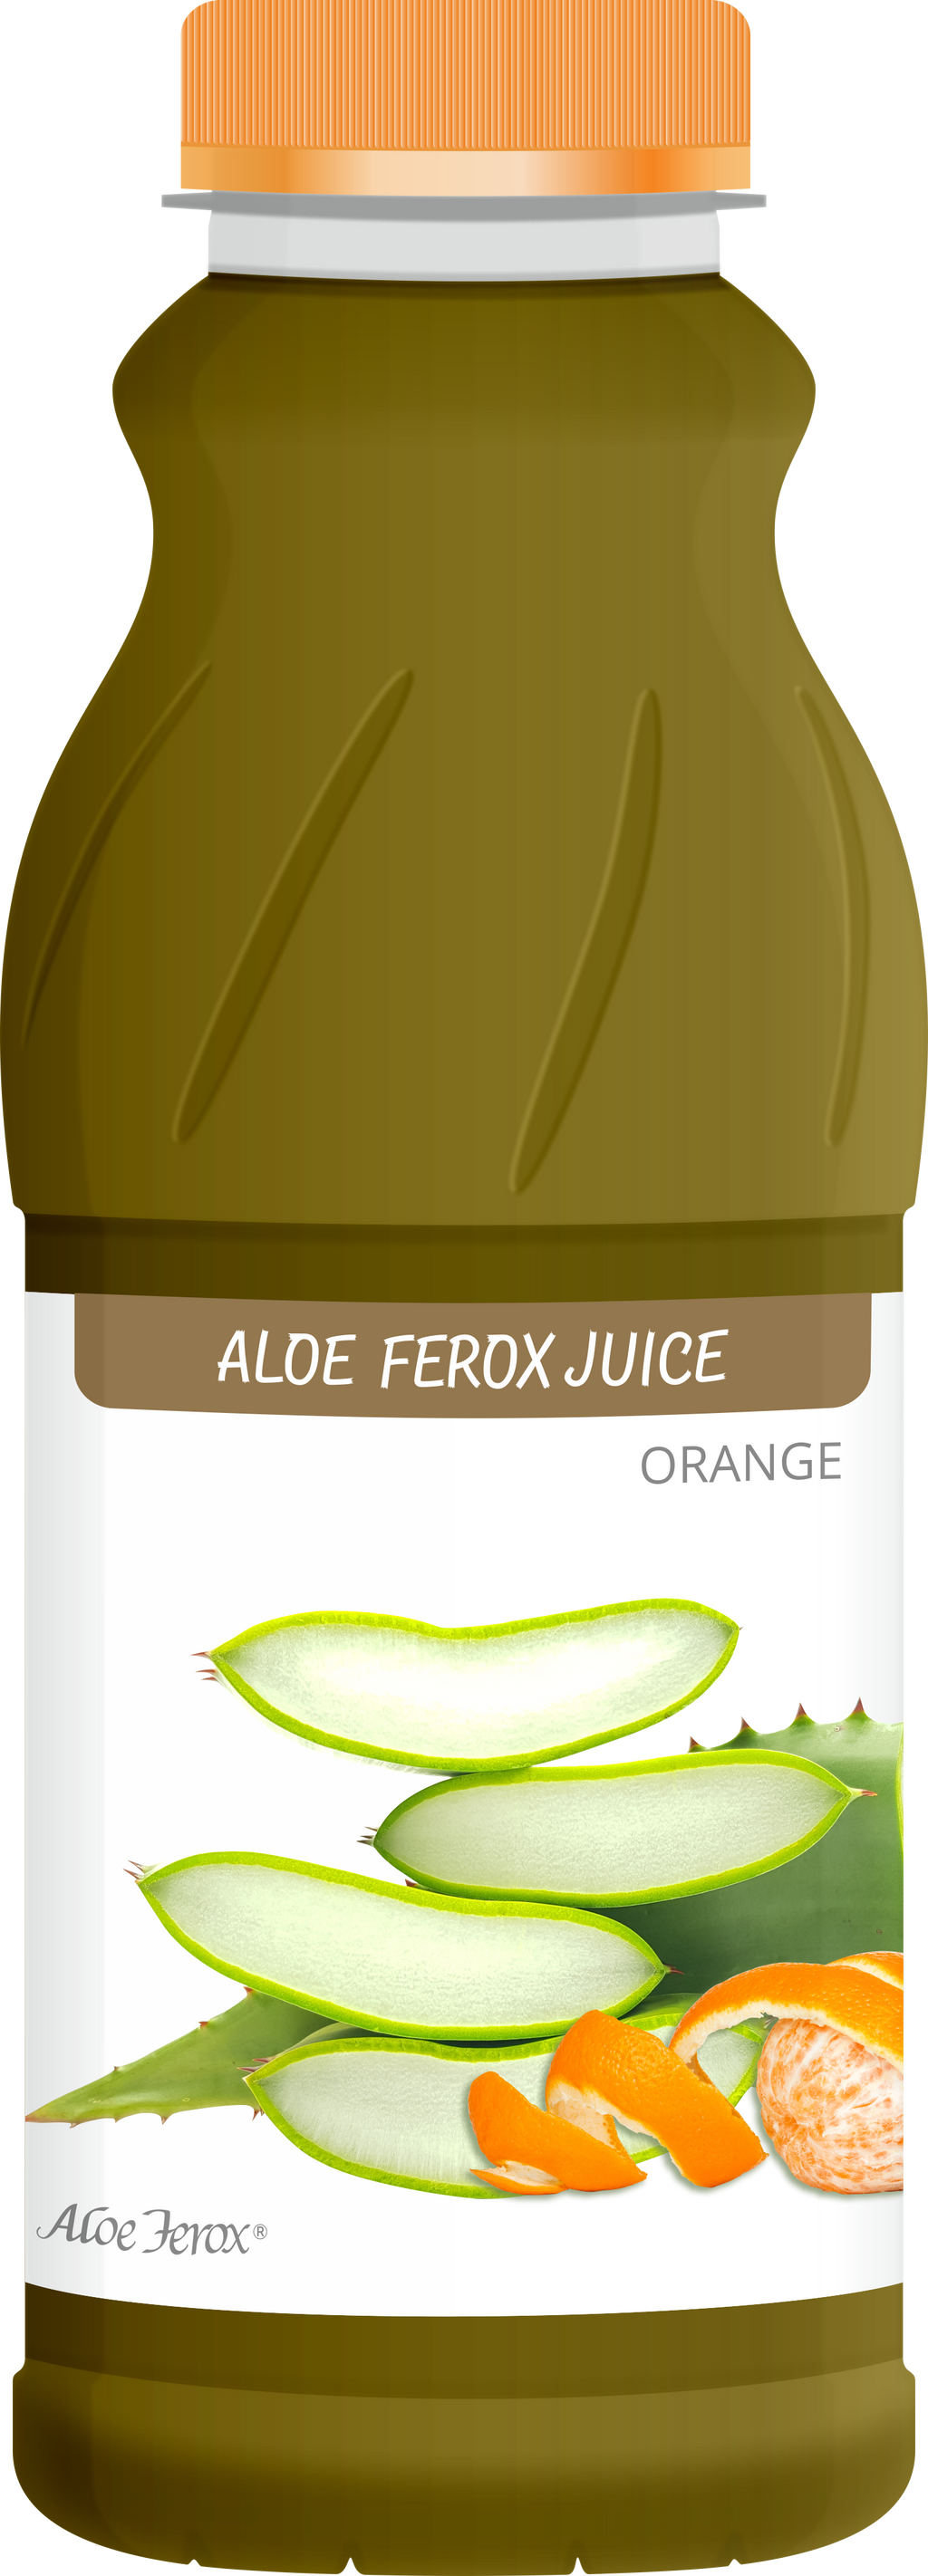 Aloe Ferox Juice Orange